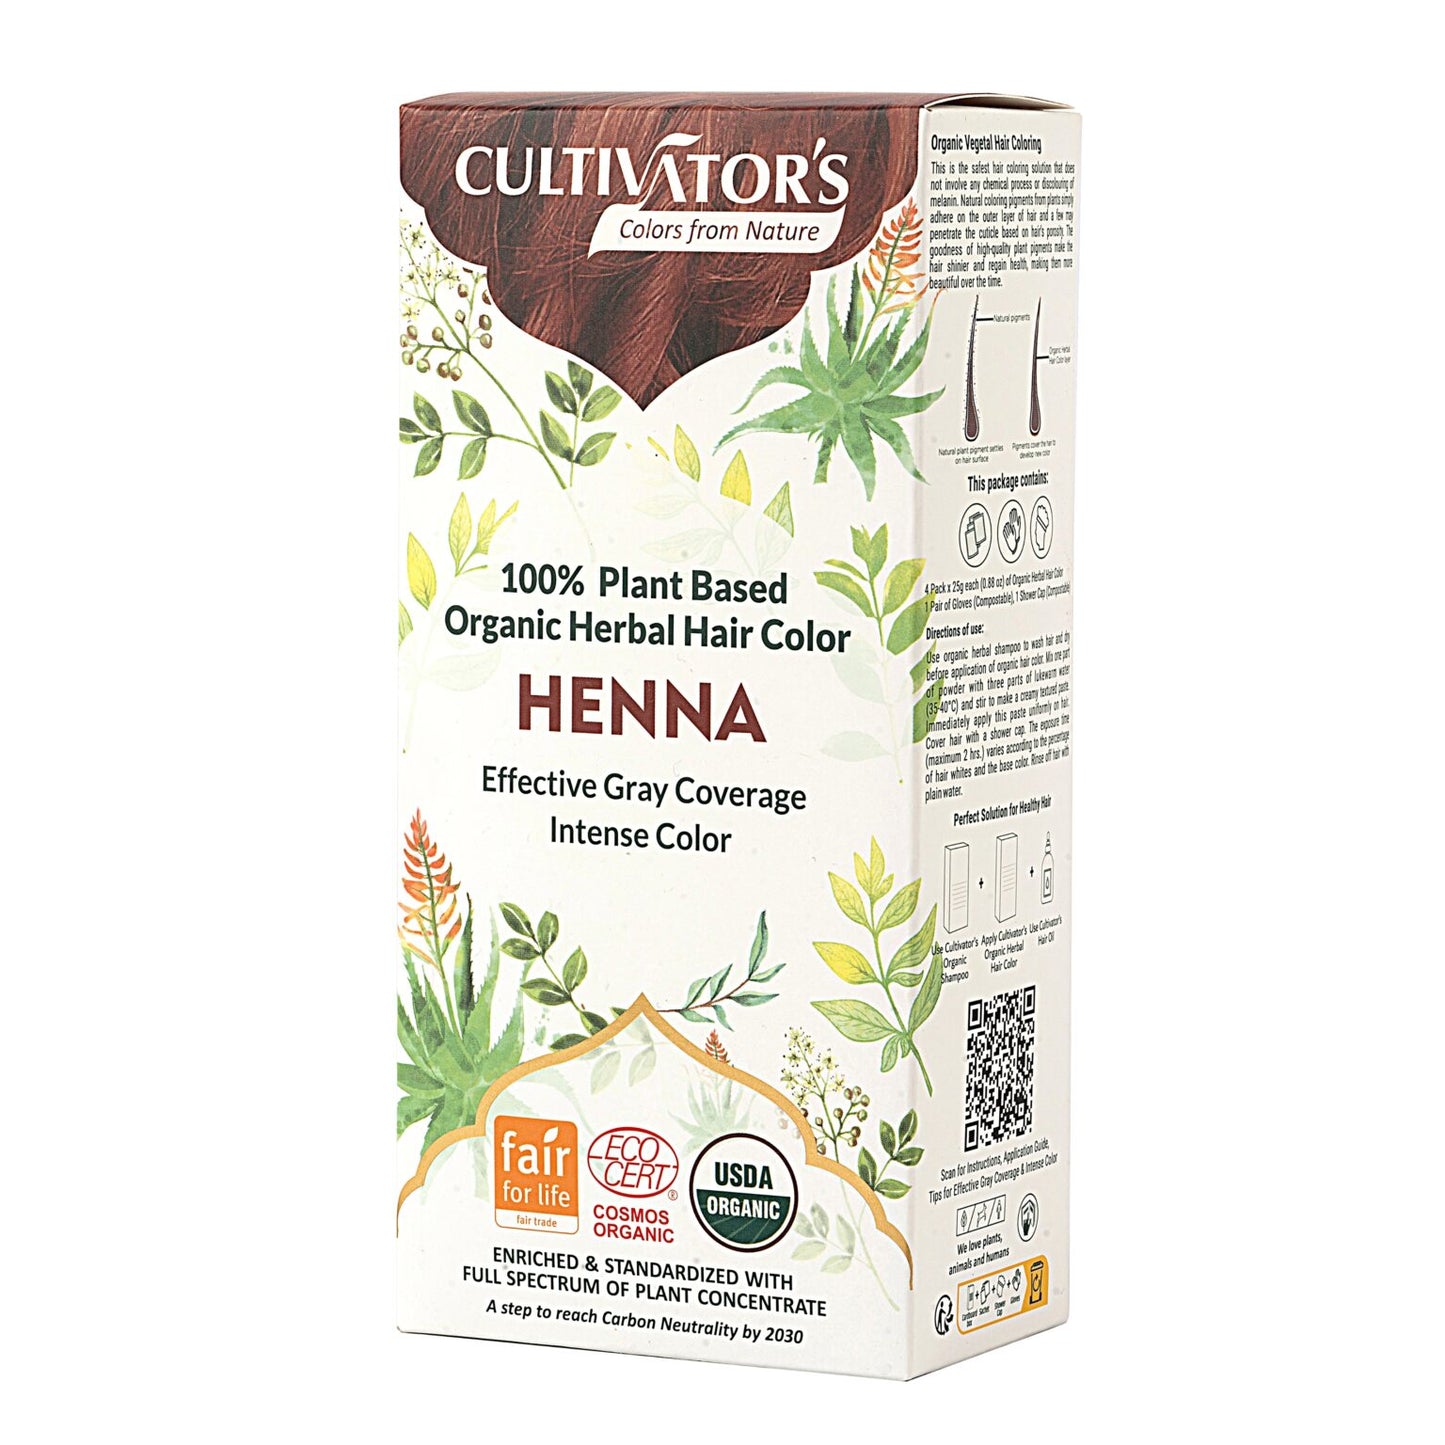 Cultivator's Herbal Hair Colour 100g